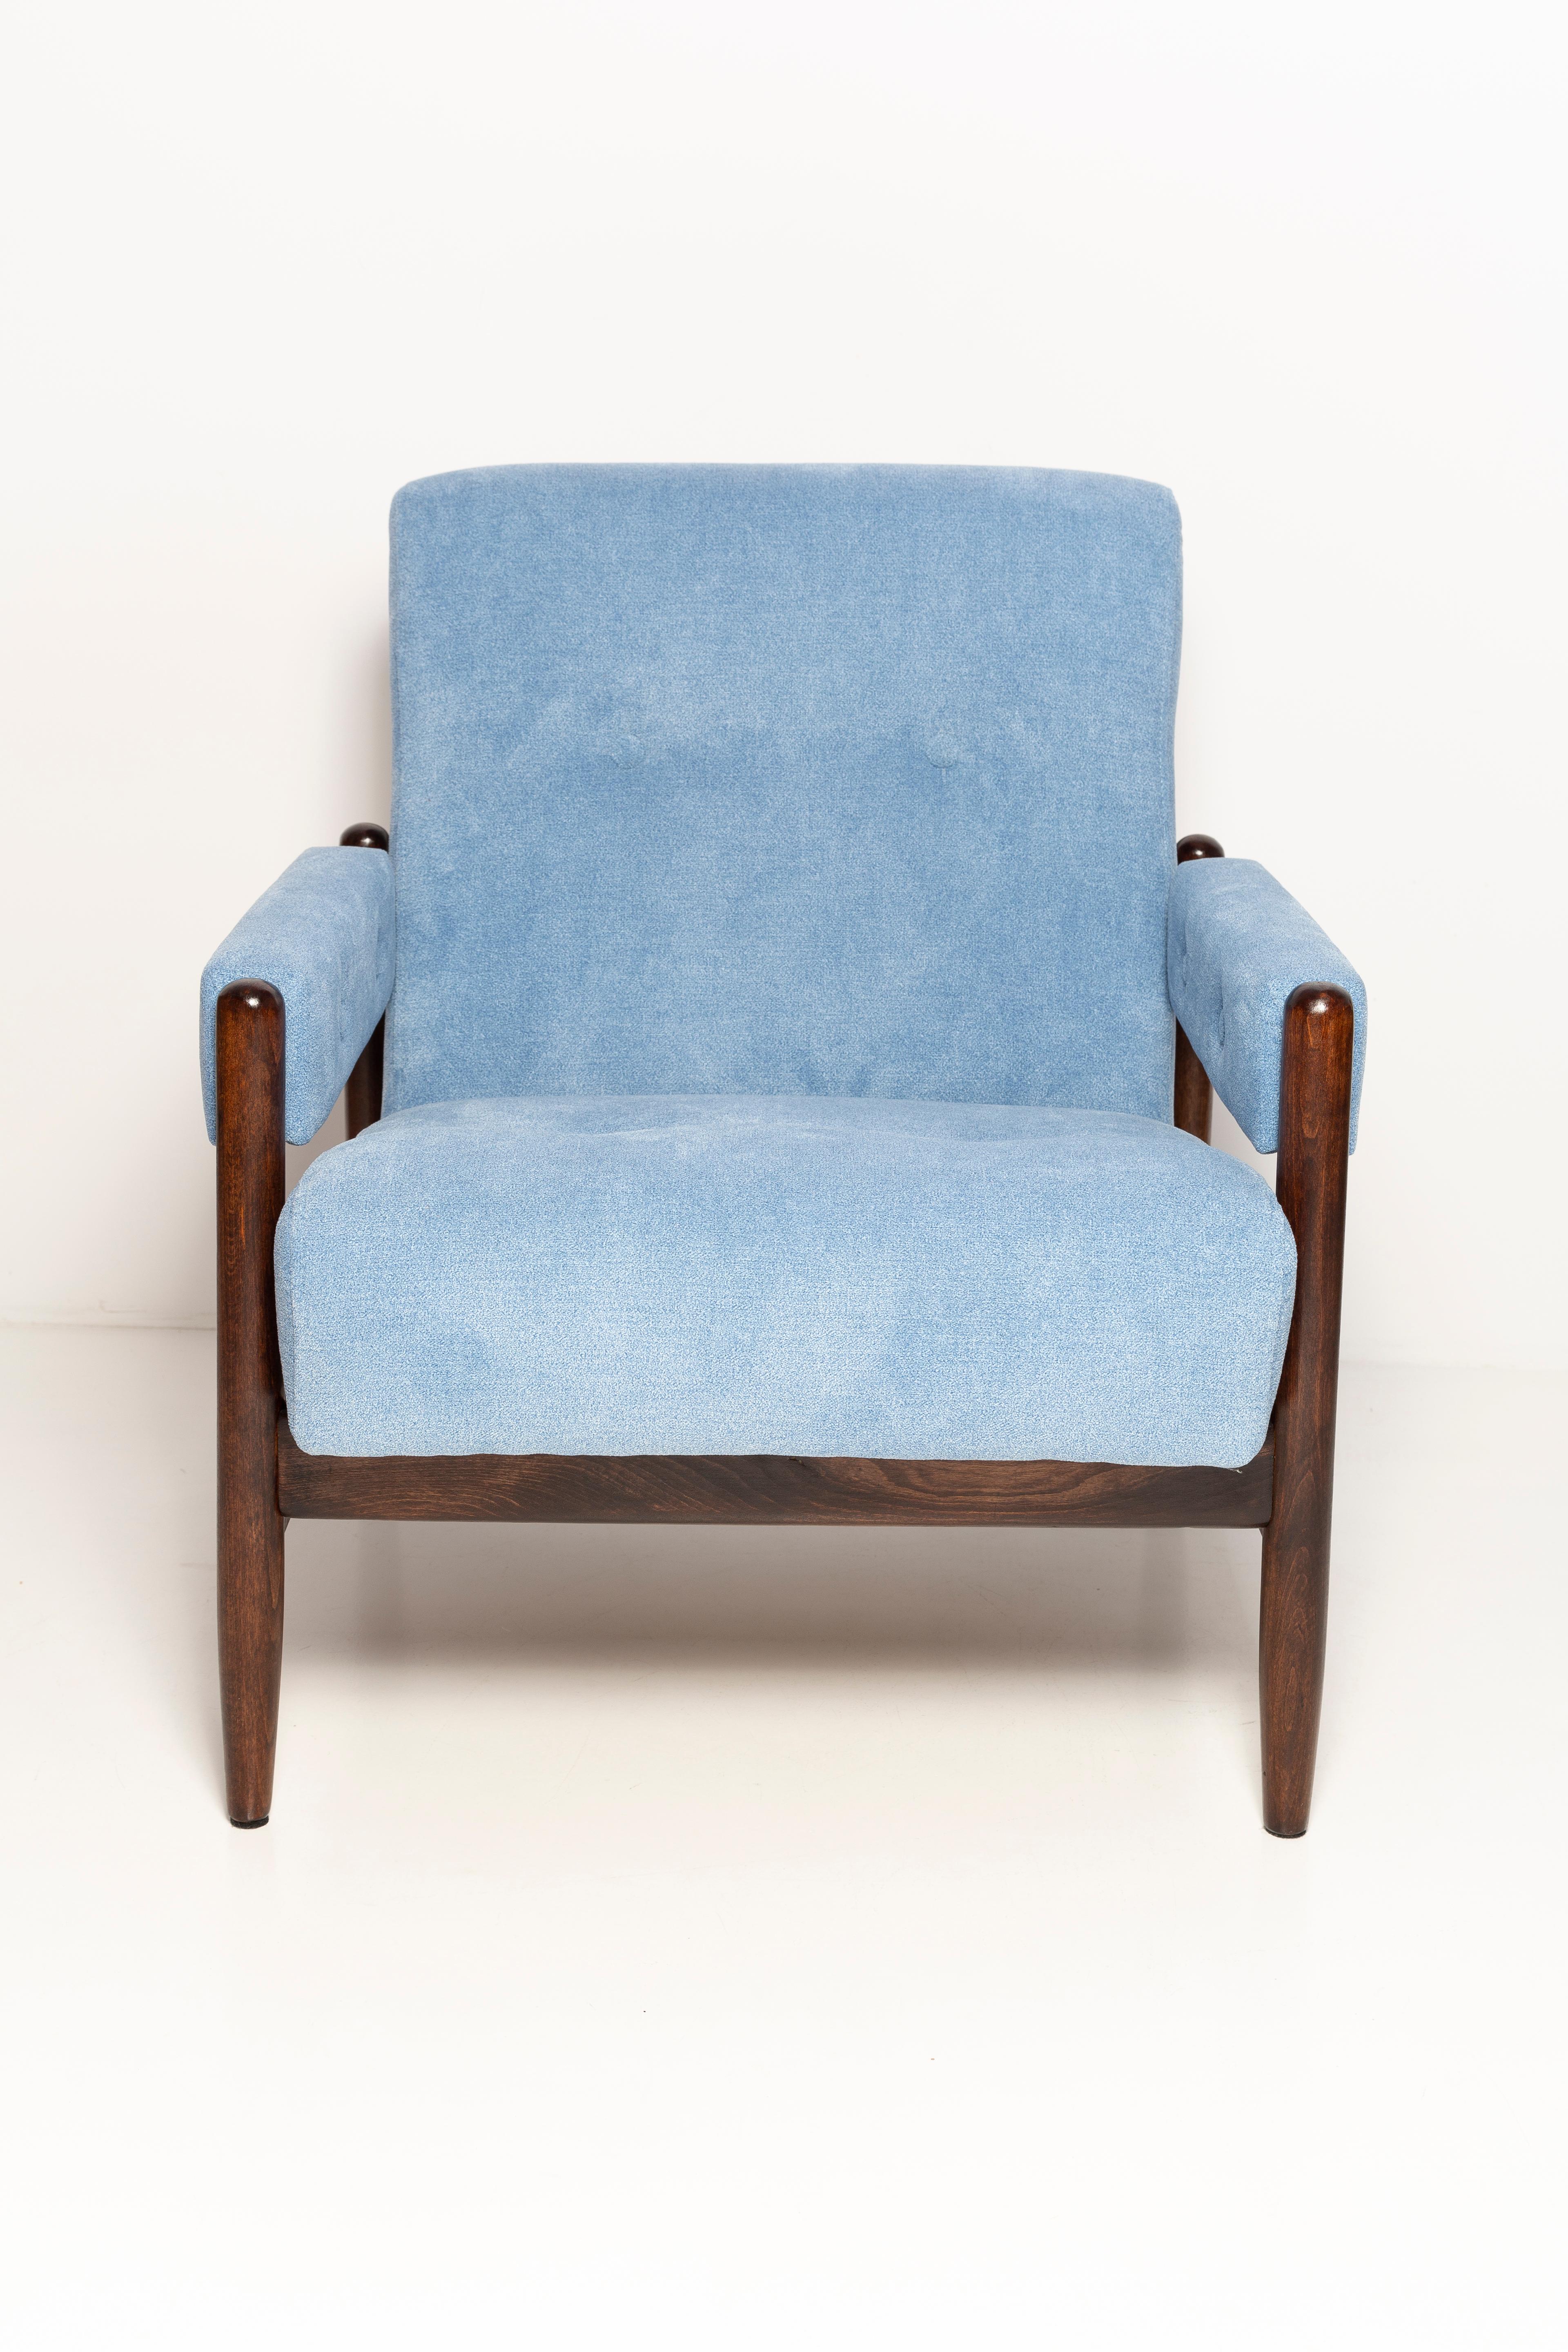 vintage blue armchair